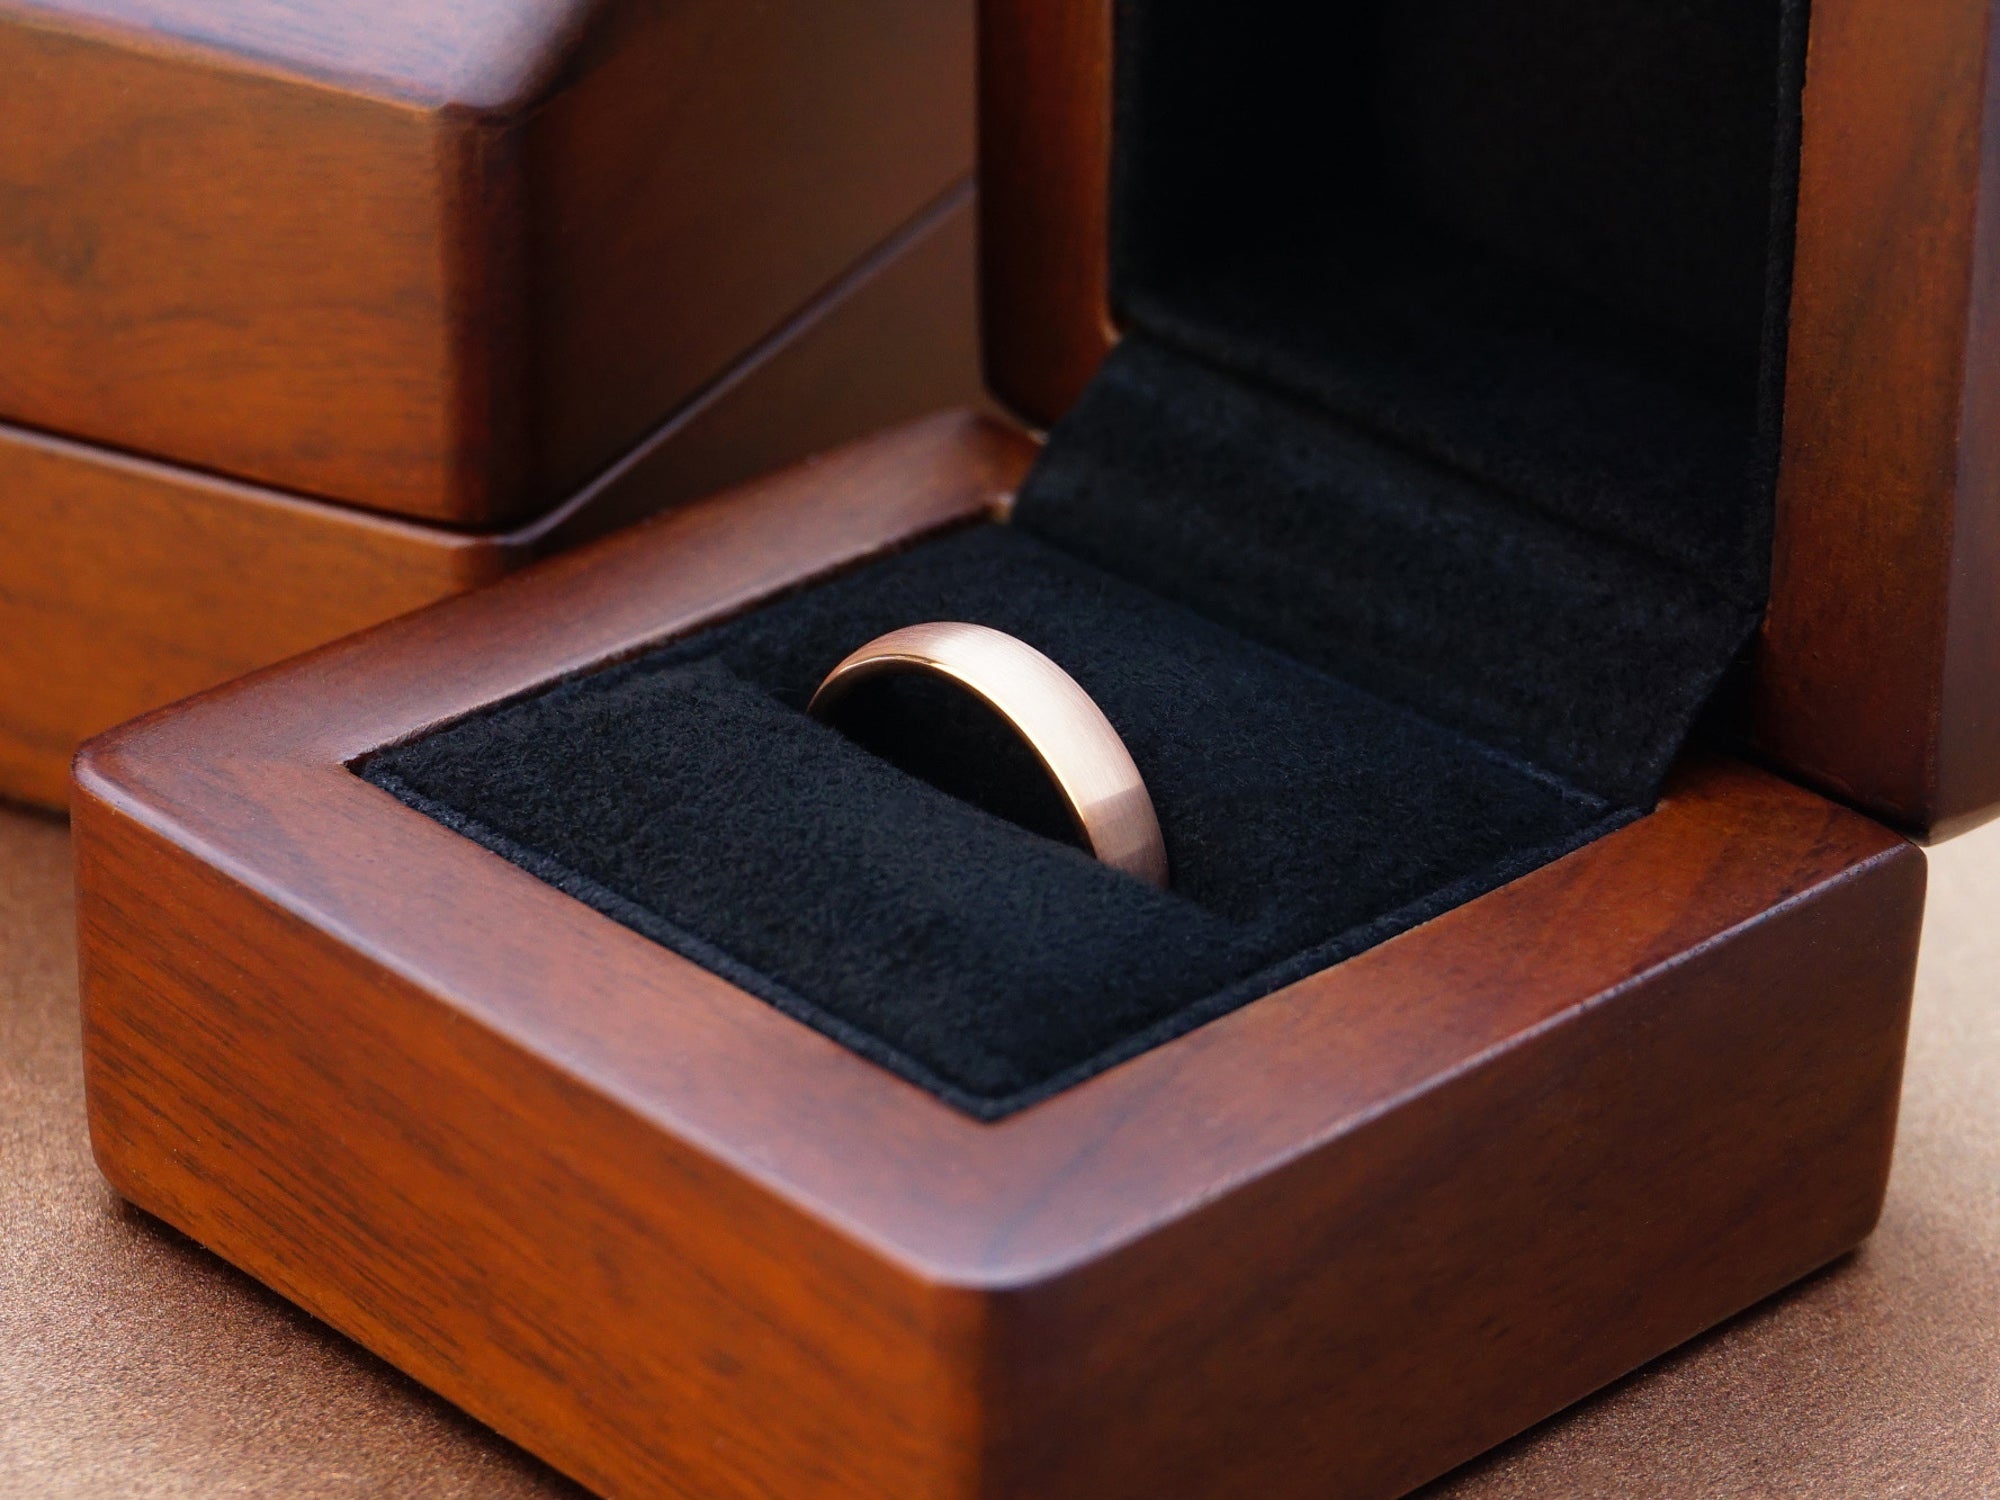 rose gold tungsten ring, rose gold brushed matte 4mm ring, minimalist womens wedding band, luxury wood ring box